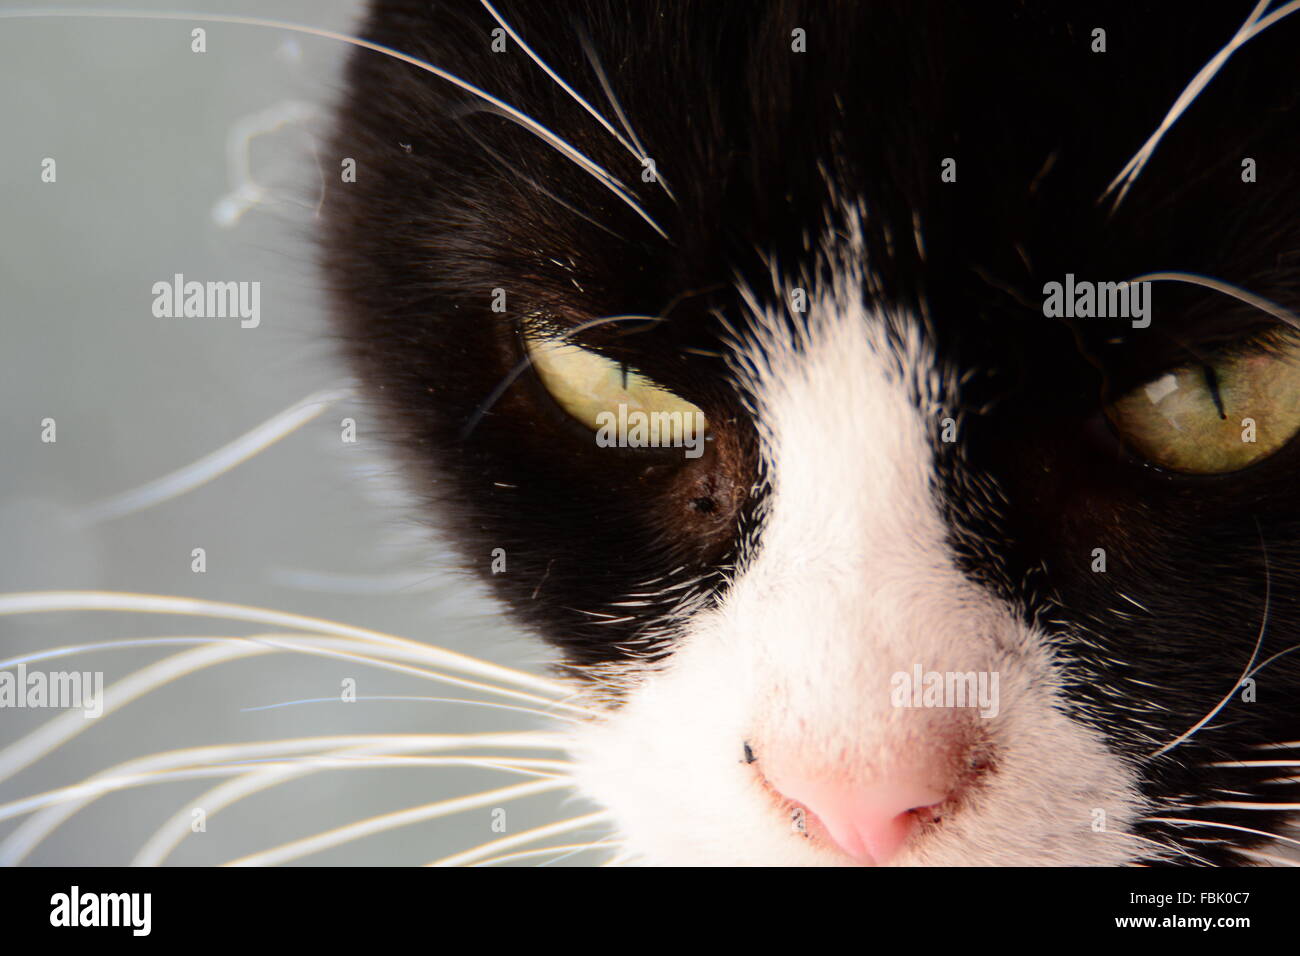 B&W Cat face Close up Banque D'Images